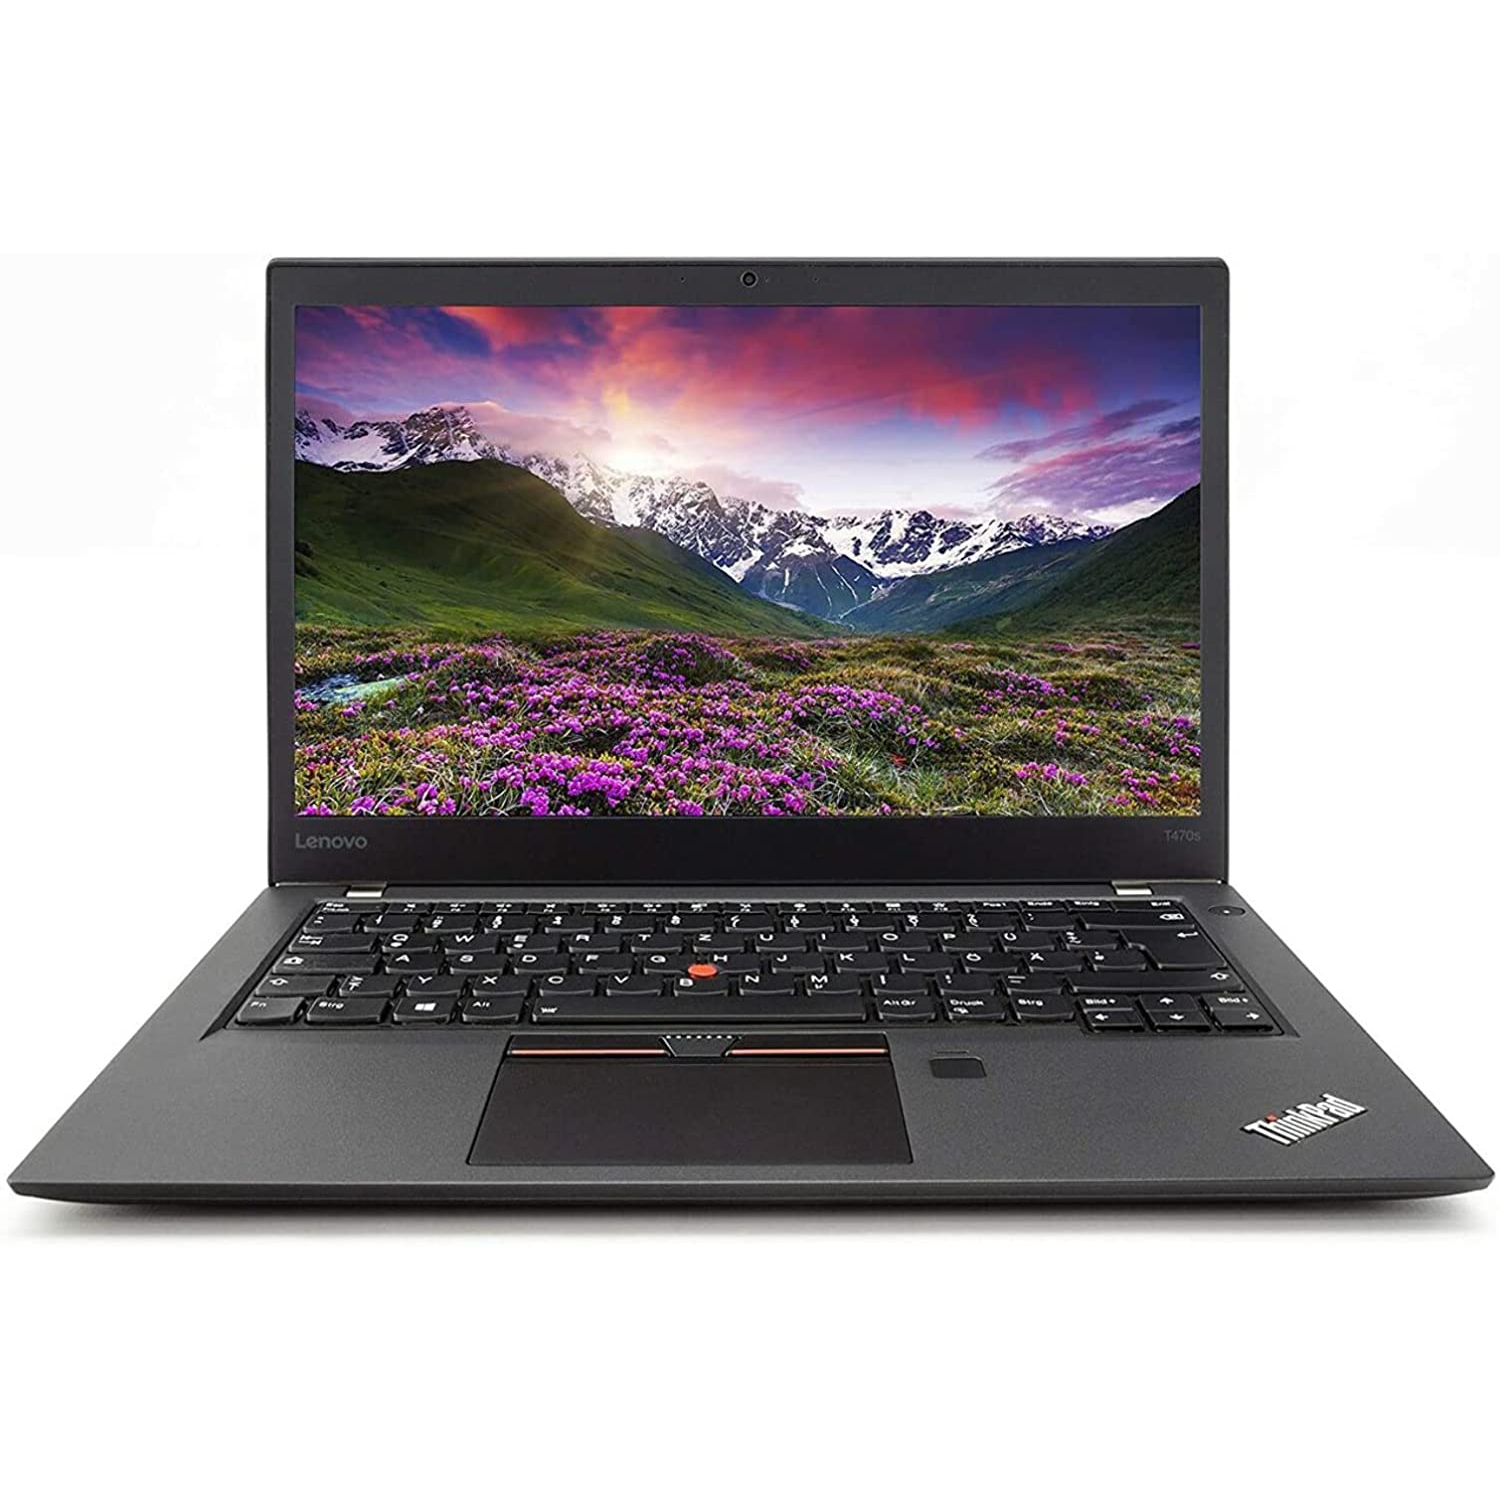 Lenovo Thinkpad T470S Laptop-14"-Intel Core i5-6300U CPU @ 2.40GHz-12Gb Ram-256GB SSD- Windows 10 Pro64 - Refurbished